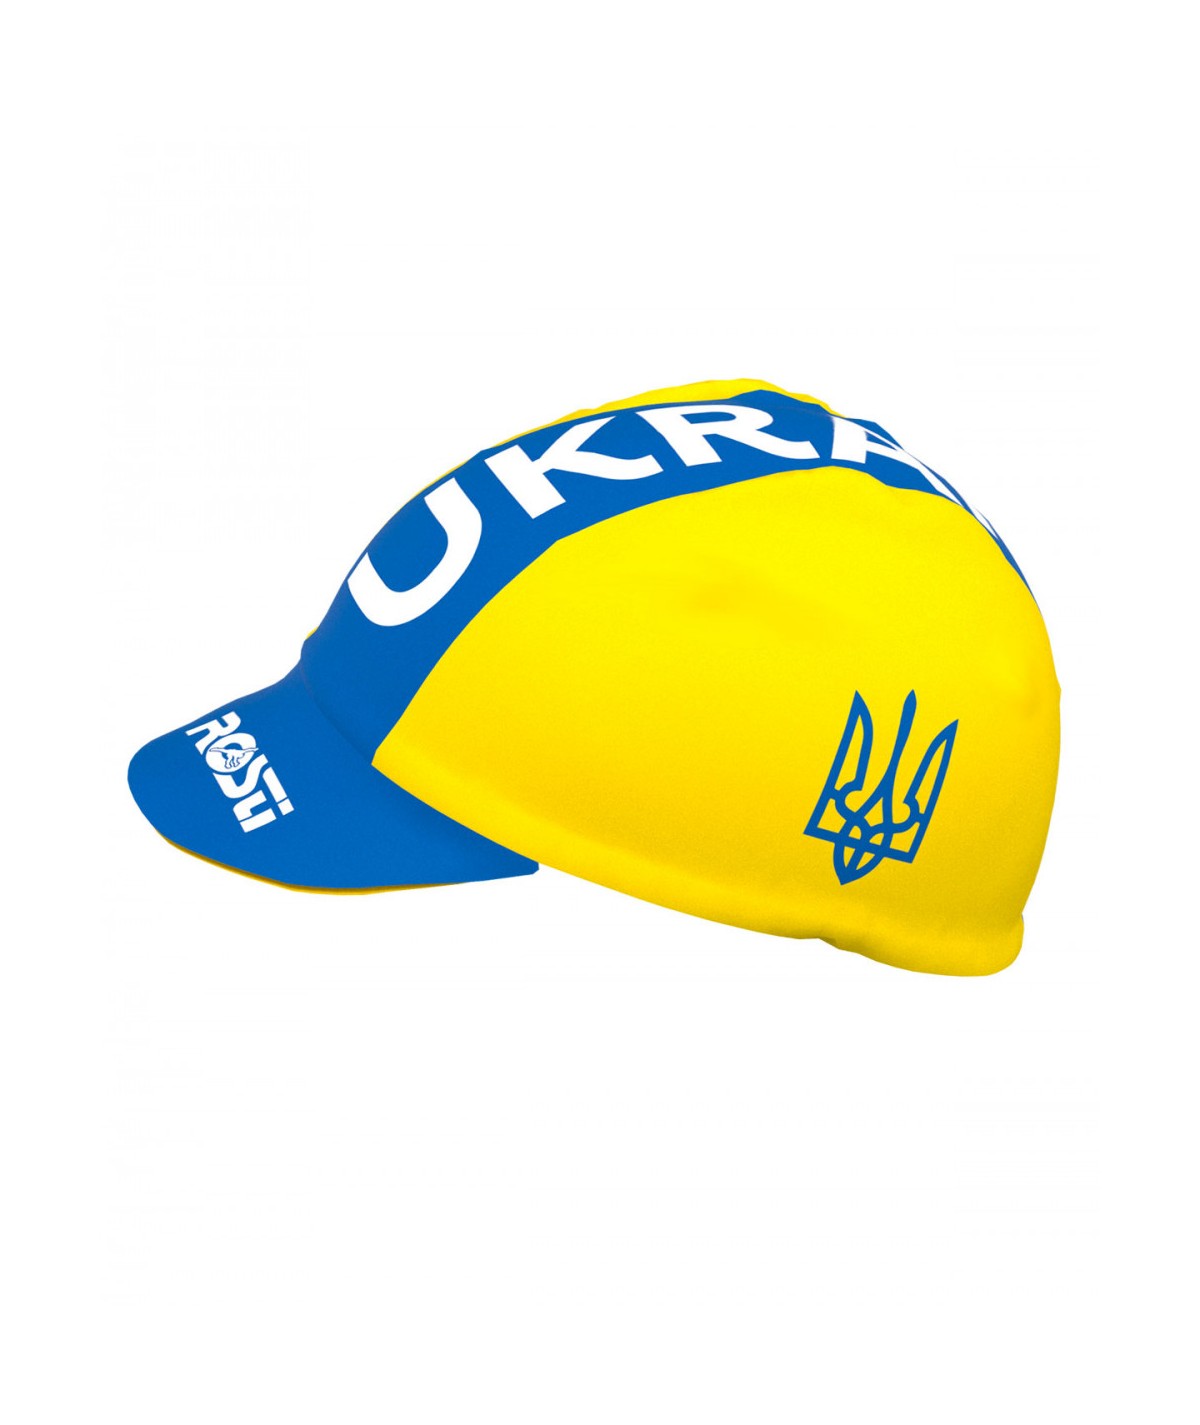 Kappe der ukrainischen Nationalmannschaft